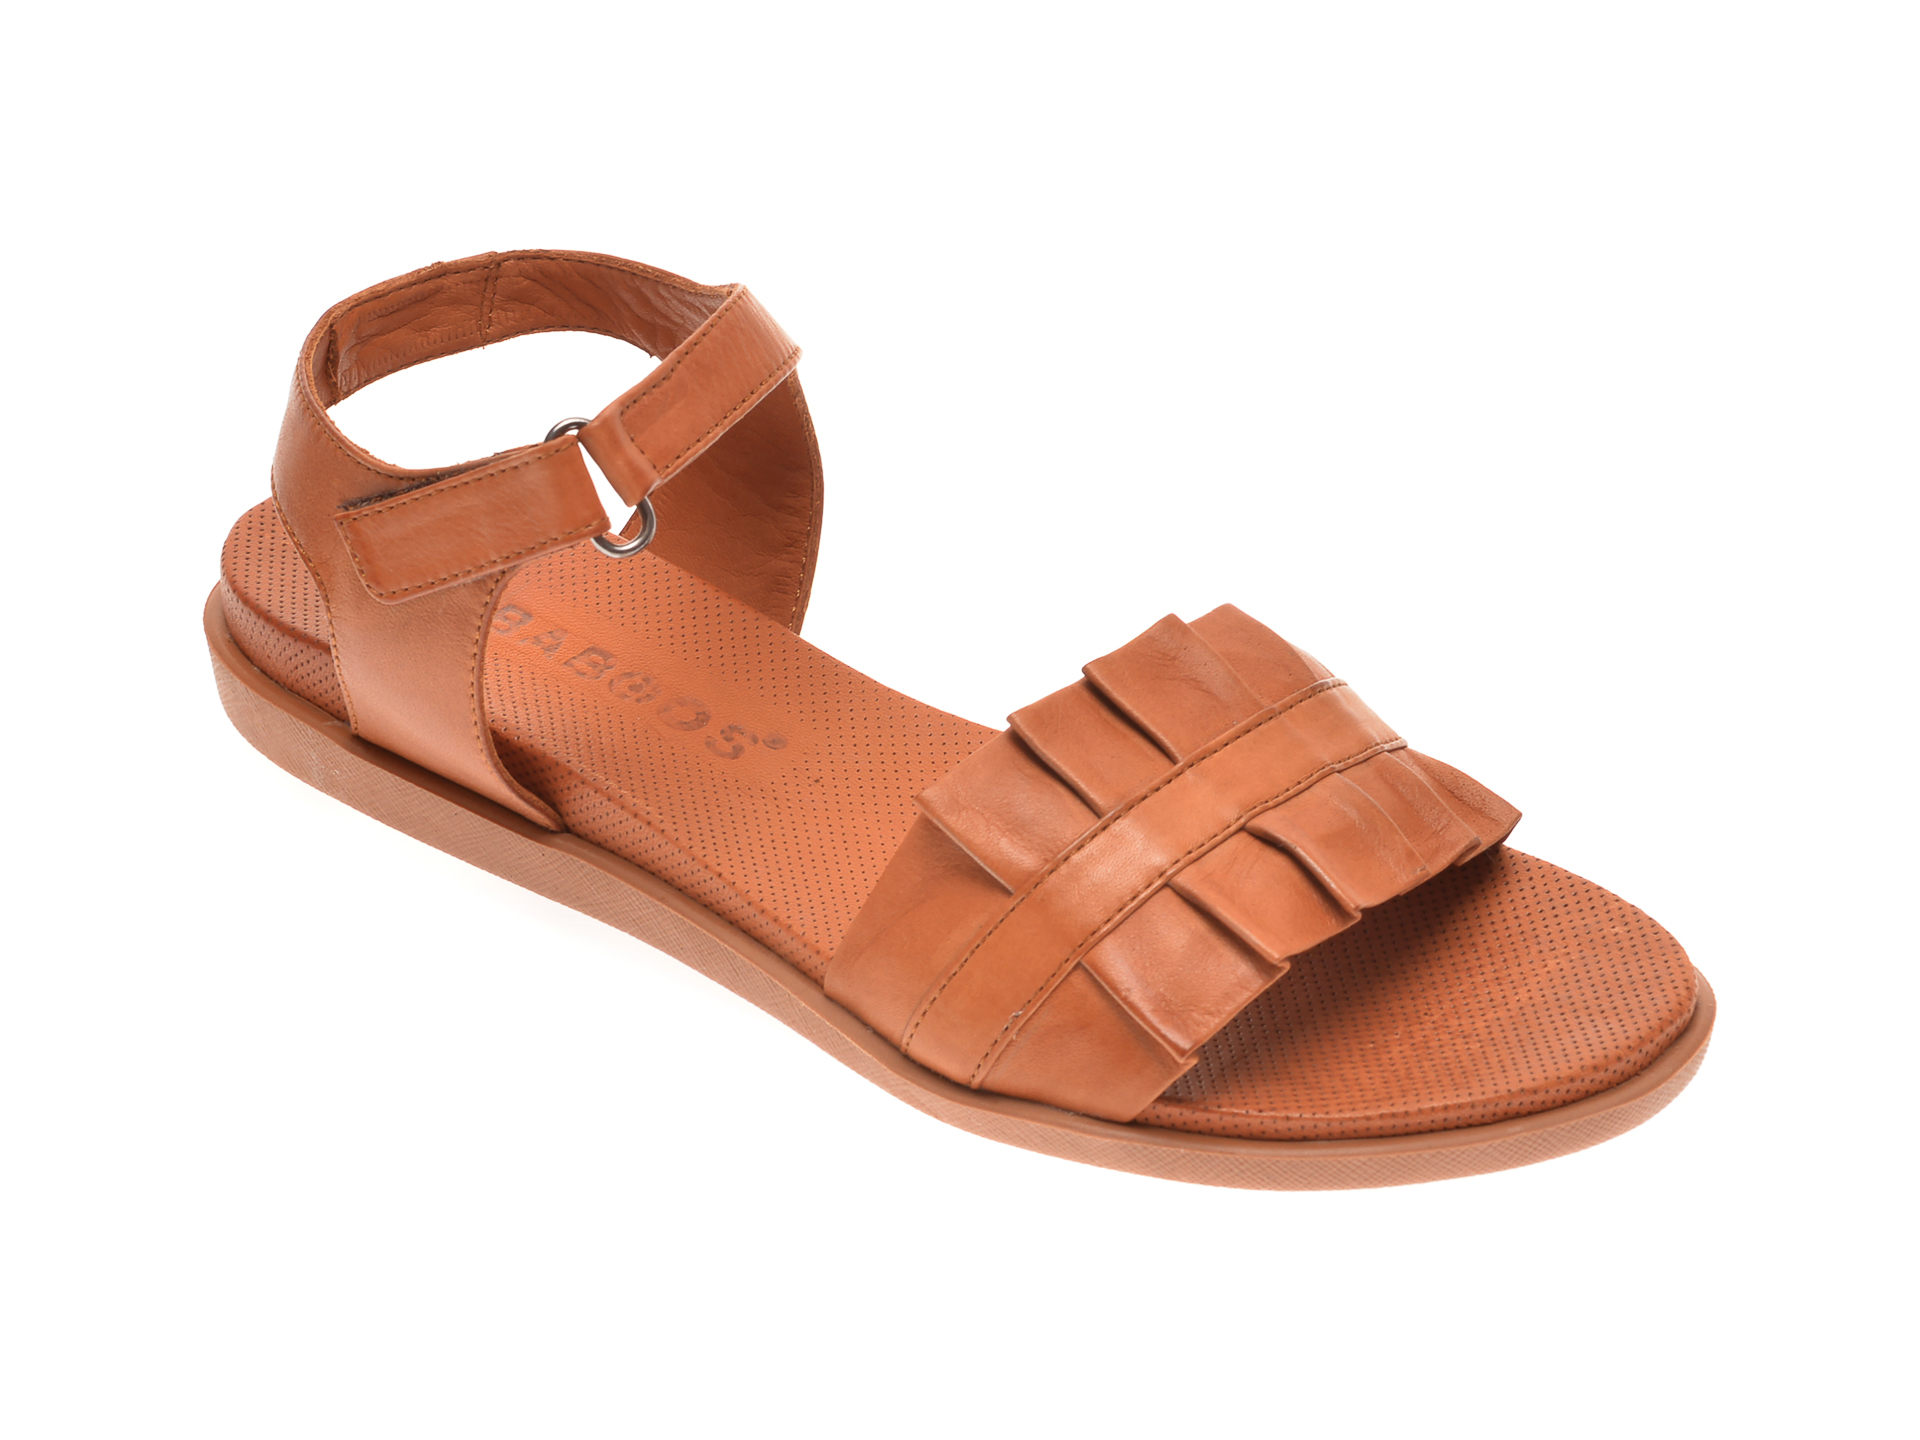 Sandale BABOOS maro, 1403, din piele naturala